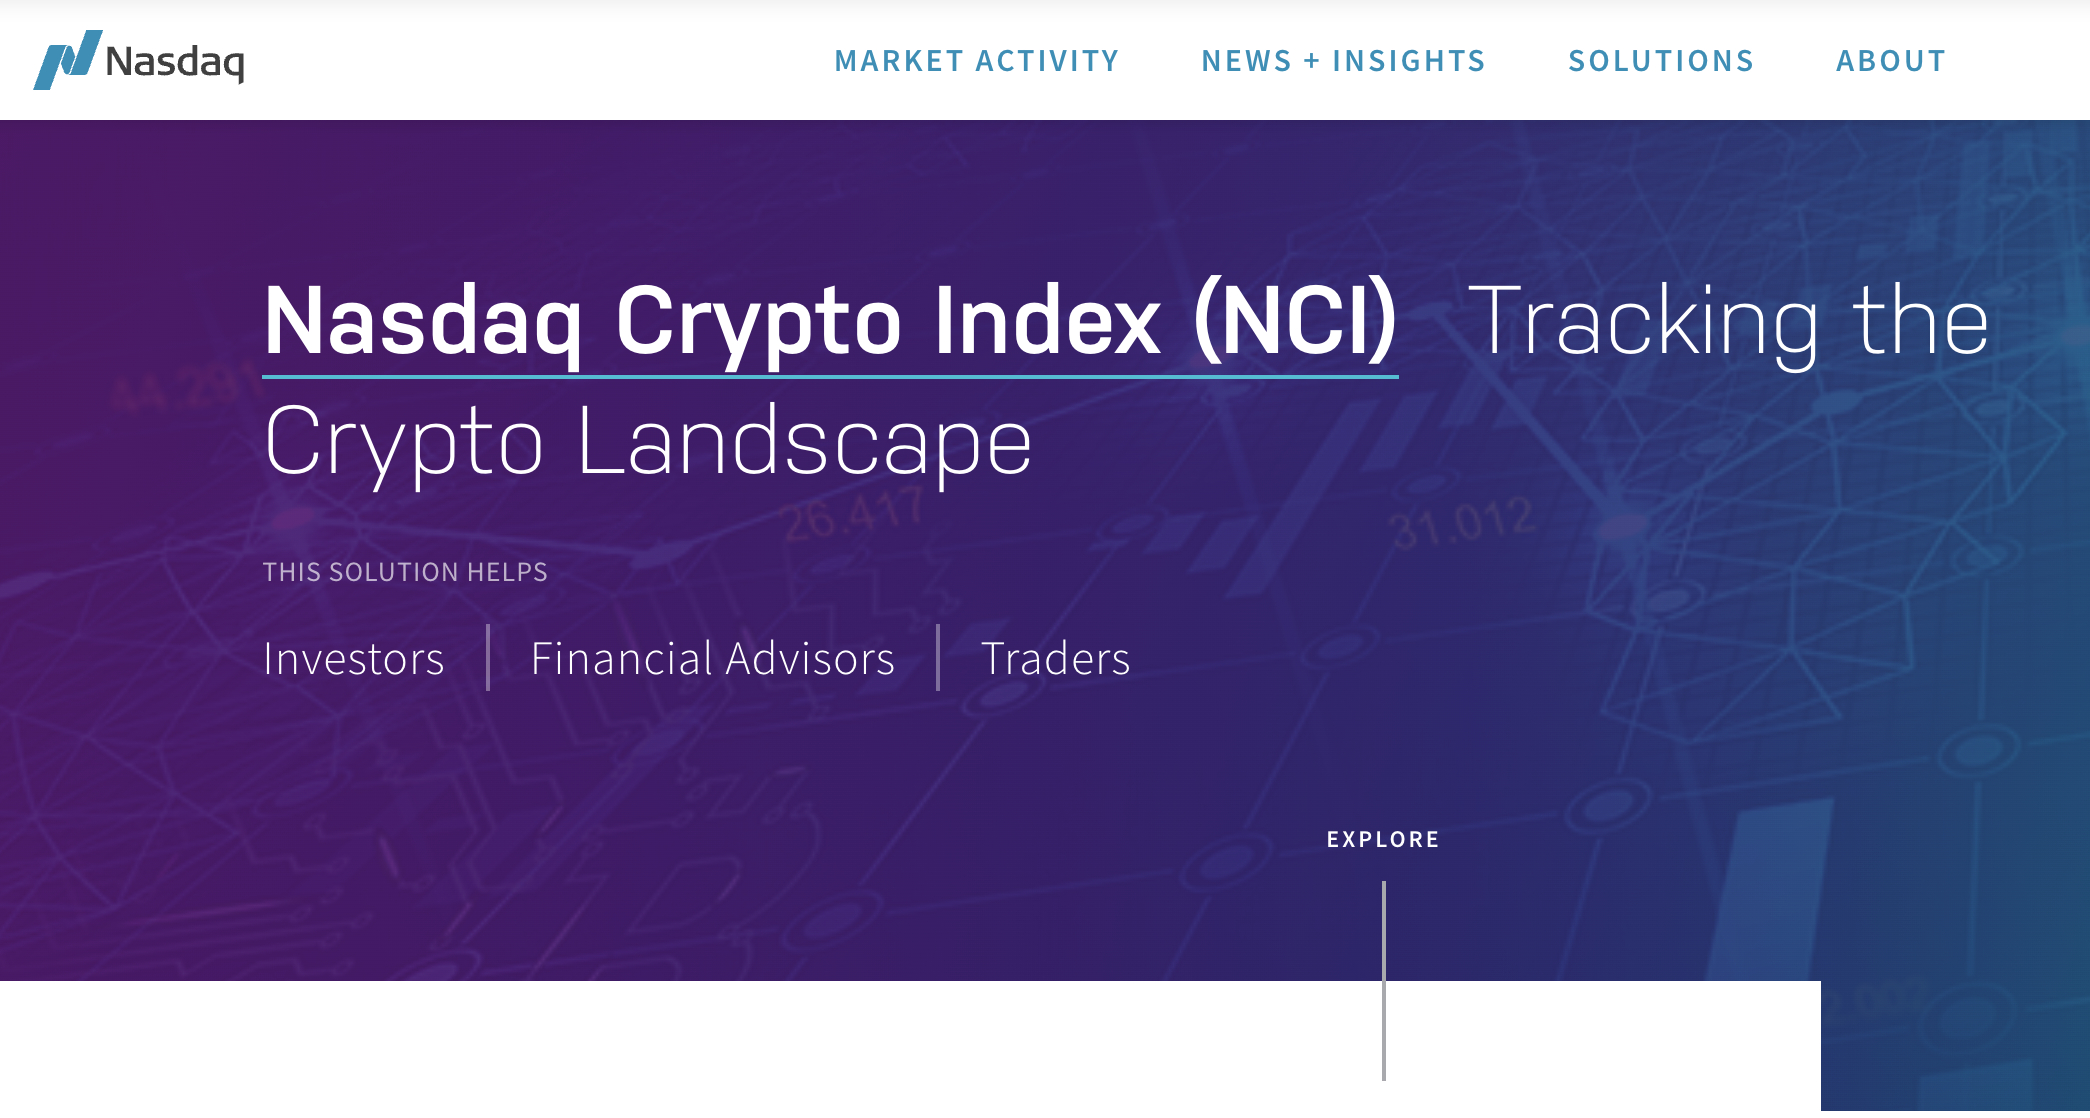 Nasdaq Crypto Index home page